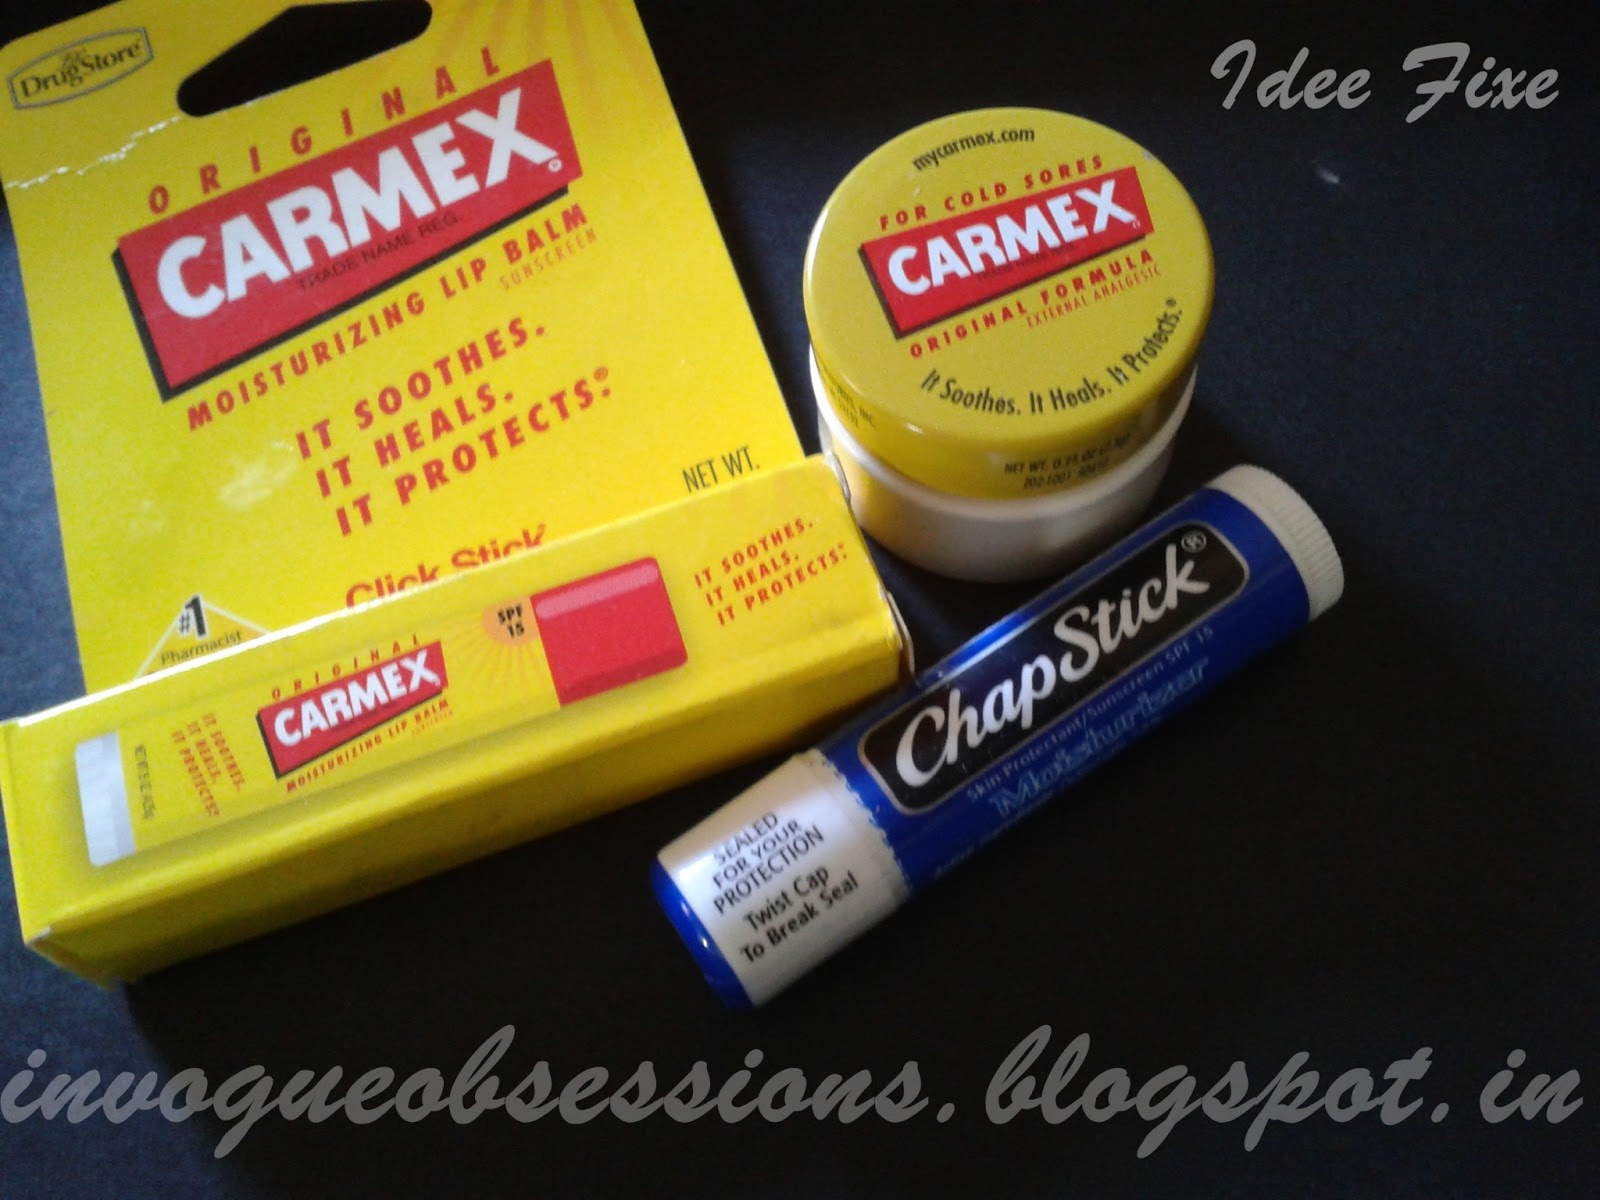 Carmex Original Formula Carmex Moisturizing Lip Balm Chapstick Moisturizer, Where to buy Carmex and Chapstick in India